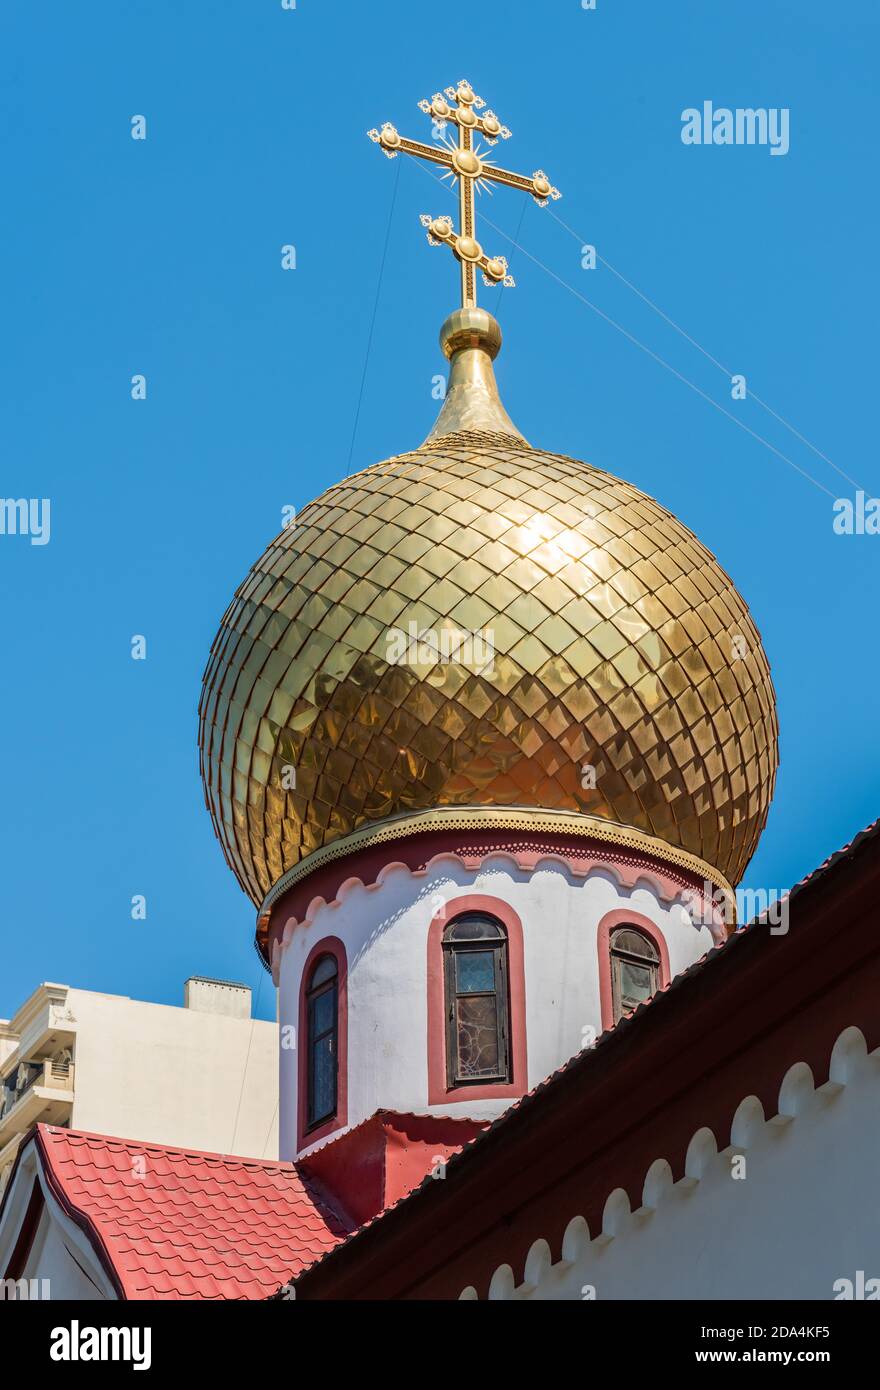 Baku, Azerbaijan – July 26, 2020. Onion dome and cross of Archangel Michael Orthodox Church in Baku. The building dates from 1850. Stock Photo